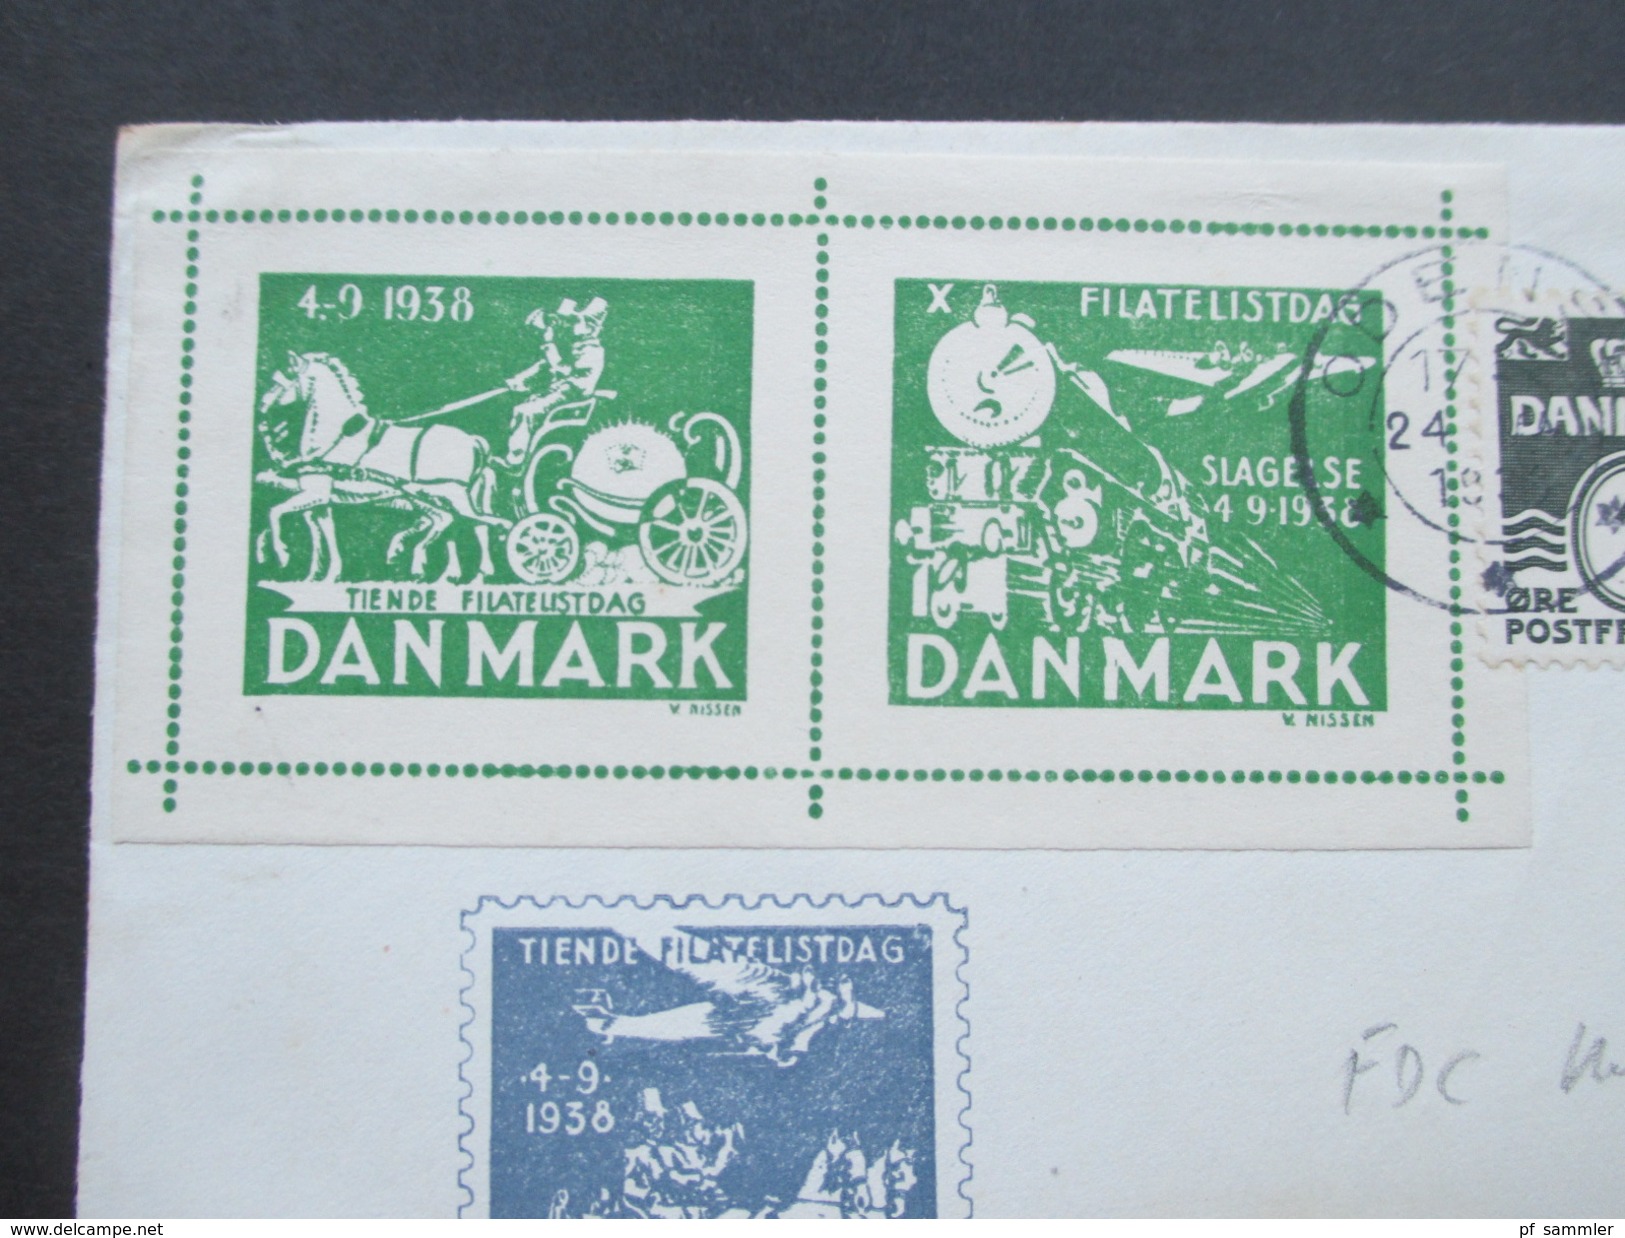 Dänemark 1938 10. Danske Filatelistdags-Udstilling. Vignetten 4.9.1938 Filatelistdag. Brief Nach Berlin Siemenstadt - Storia Postale